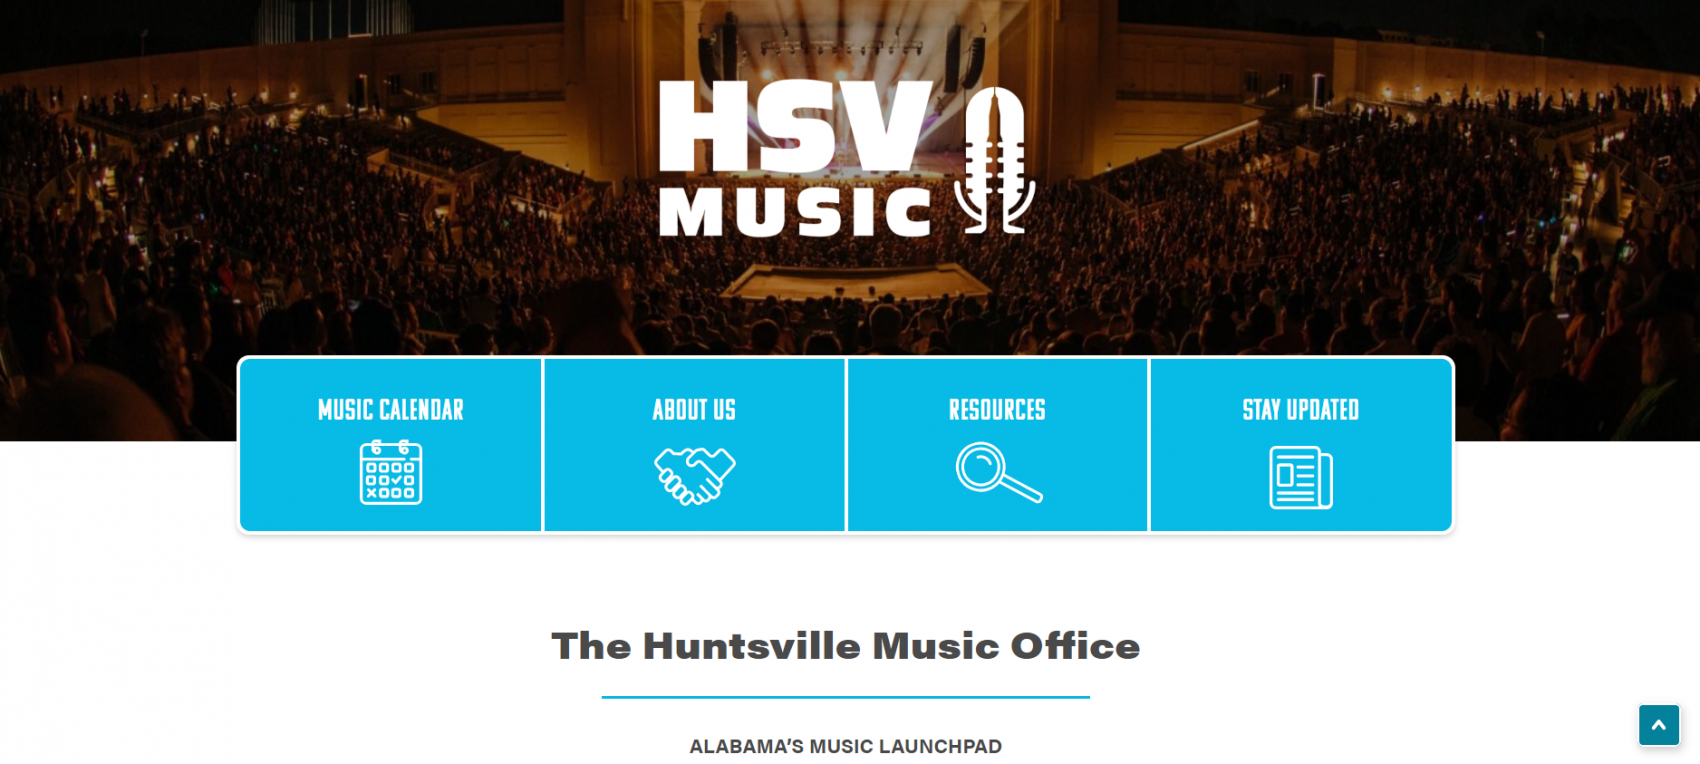 New Huntsville Music Office website features comprehensive music